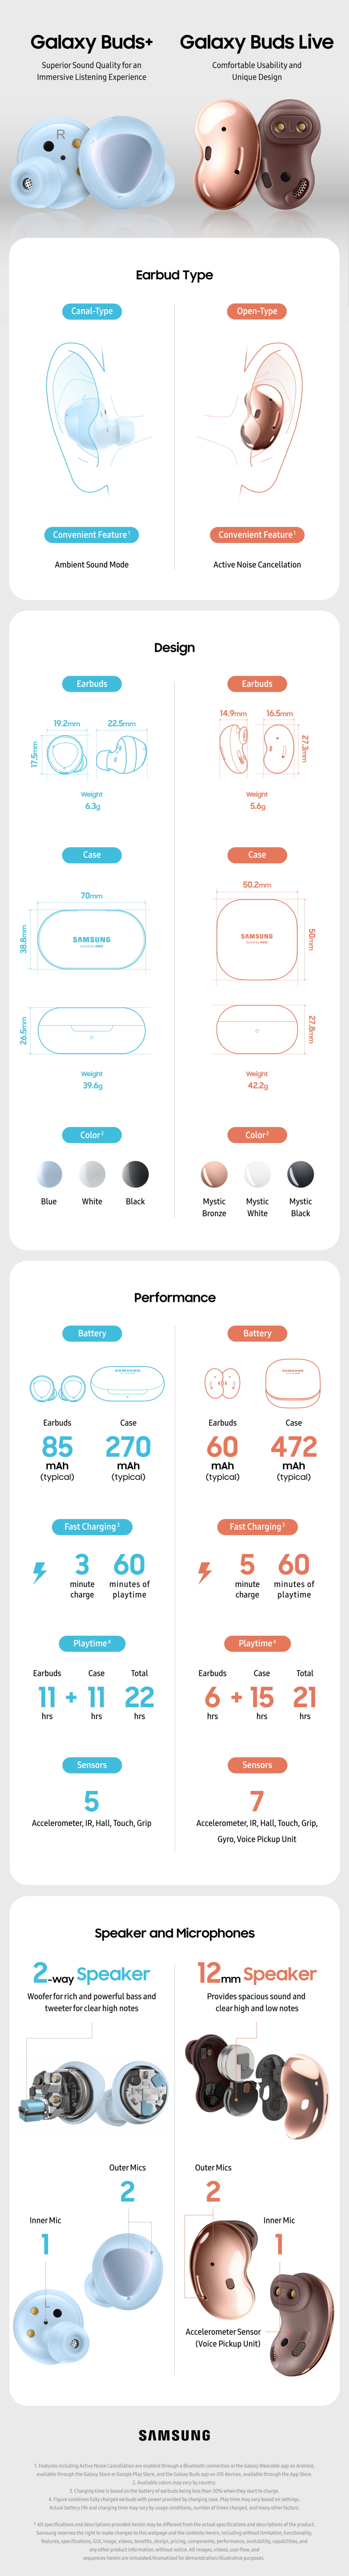 Samsung Galaxy Buds Plus vs. Galaxy Buds Live Infographic